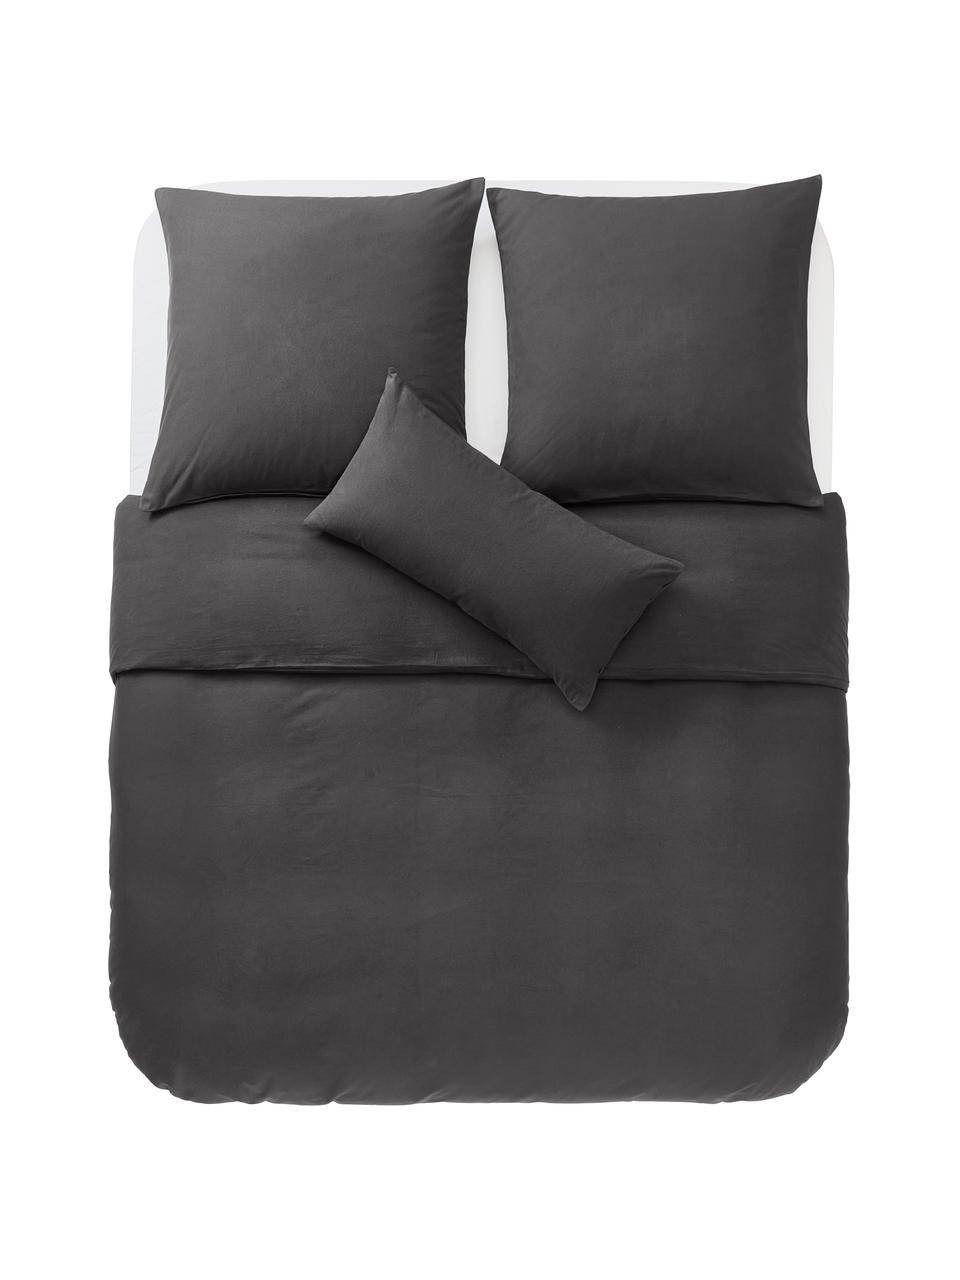 Flanell-Bettdeckenbezug Biba aus Baumwolle in Dunkelgrau, Webart: Flanell Flanell ist ein k, Dunkelgrau, B 200 x L 200 cm